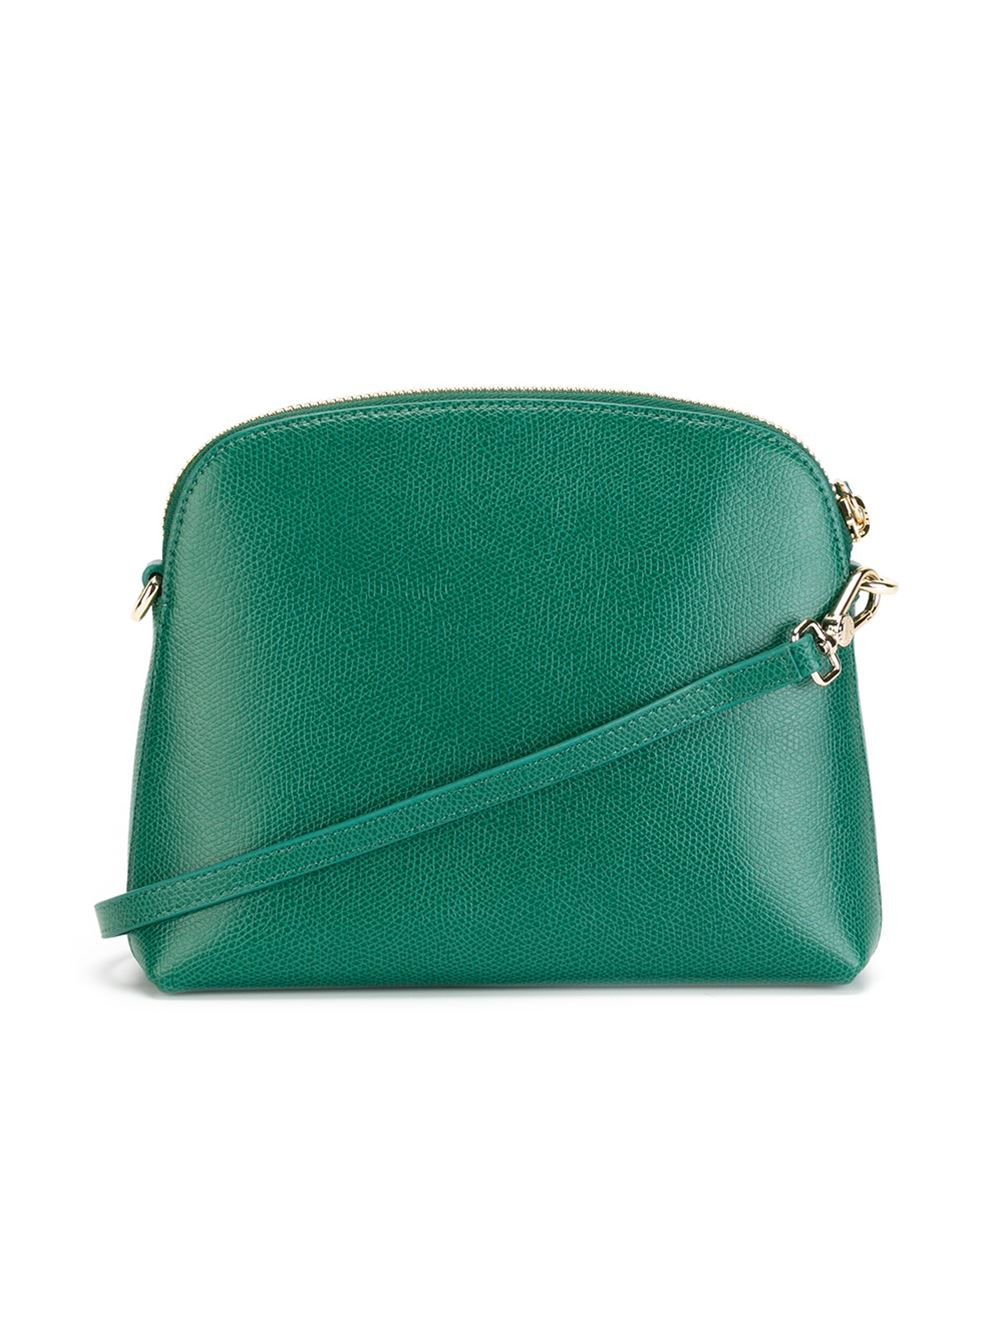 Lyst - Furla 'piper' Mini Bag in Green